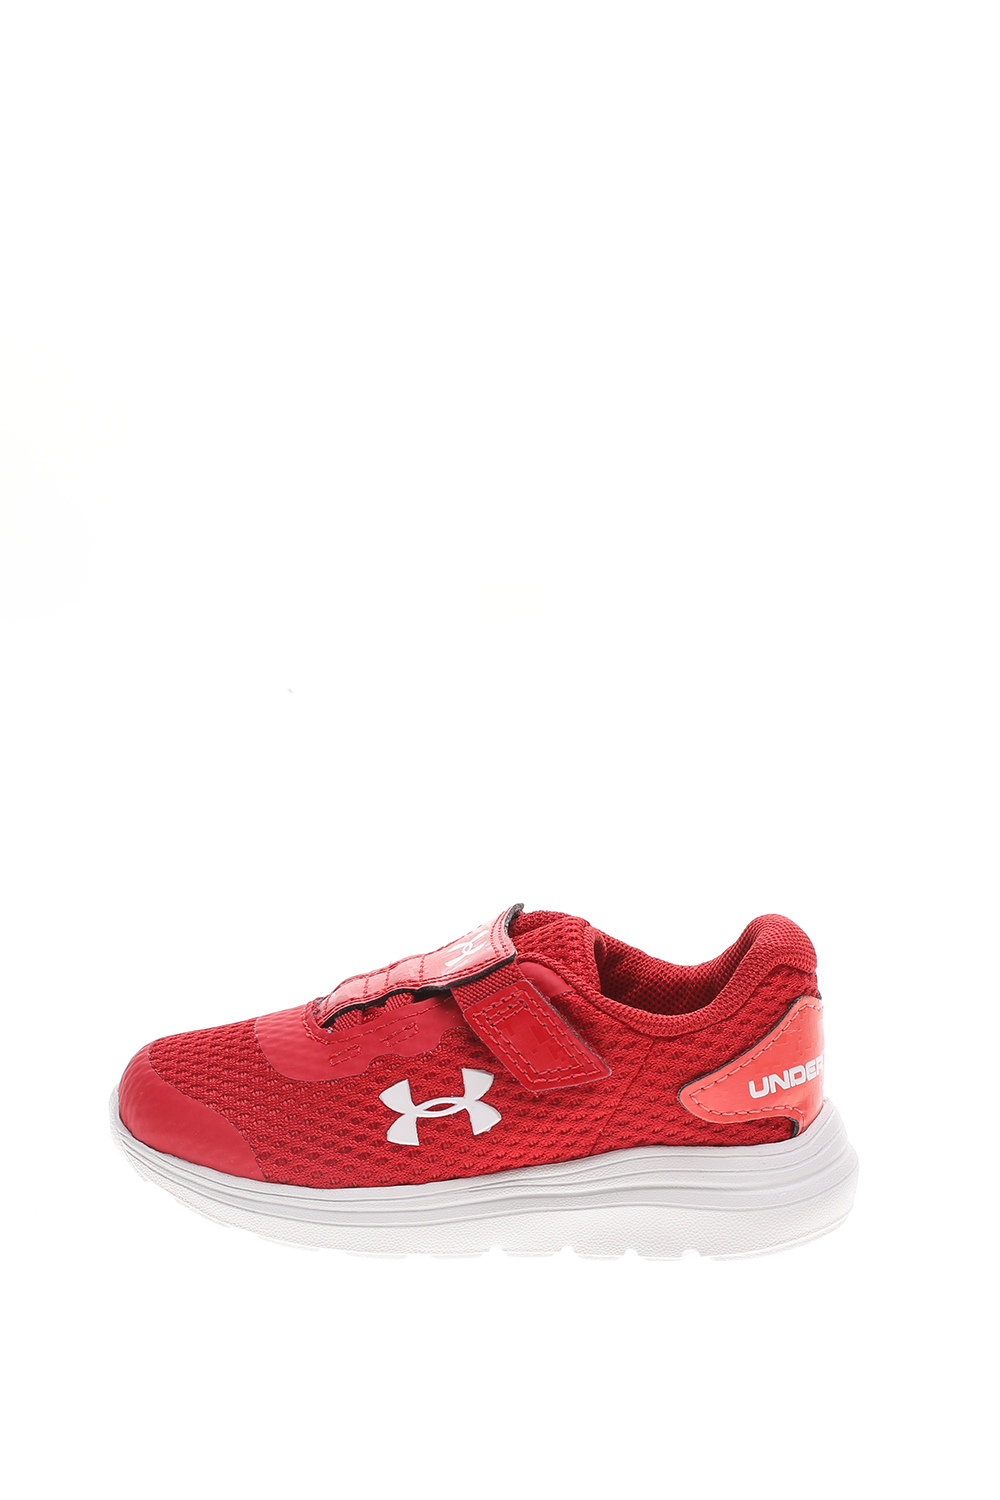 UNDER ARMOUR – Παιδικα αθλητικα παπουτσια UNDER ARMOUR Inf Surge 2 AC κοκκινα